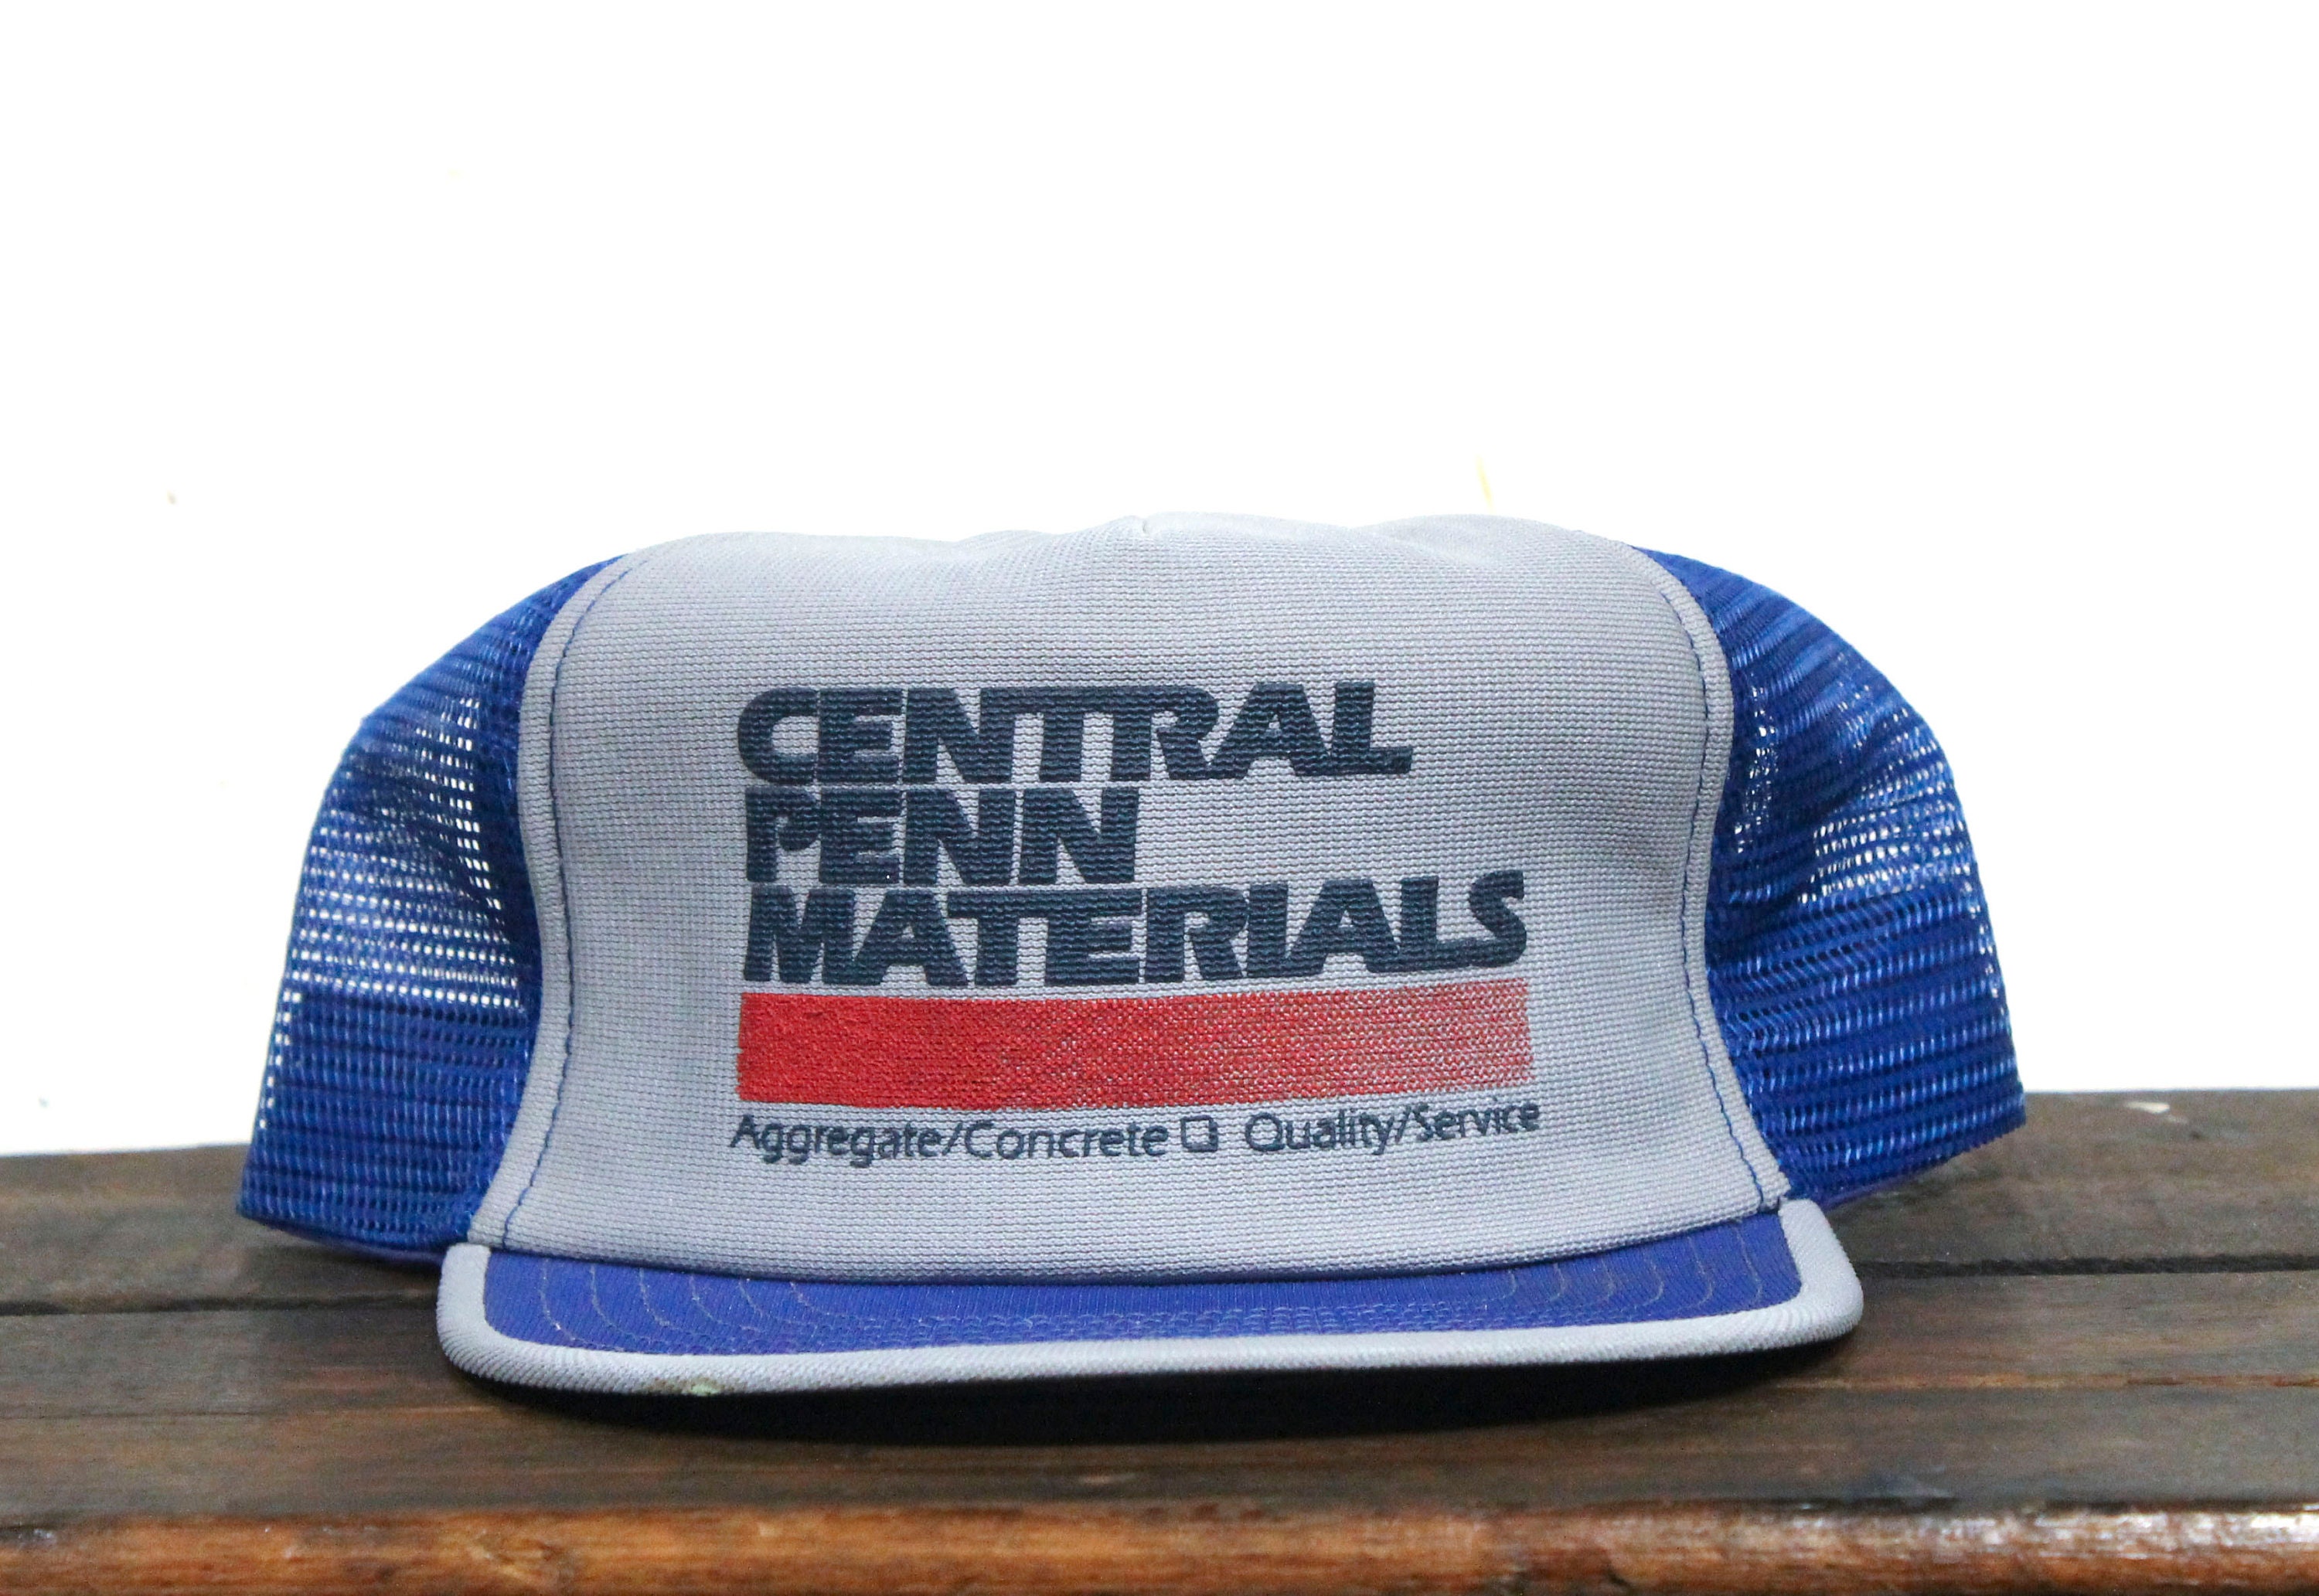 Vintage Central Penn Materials Building Supply Supplies Concrete Pennsylvania Trucker Hat Snapback Baseball Cap Made in USA